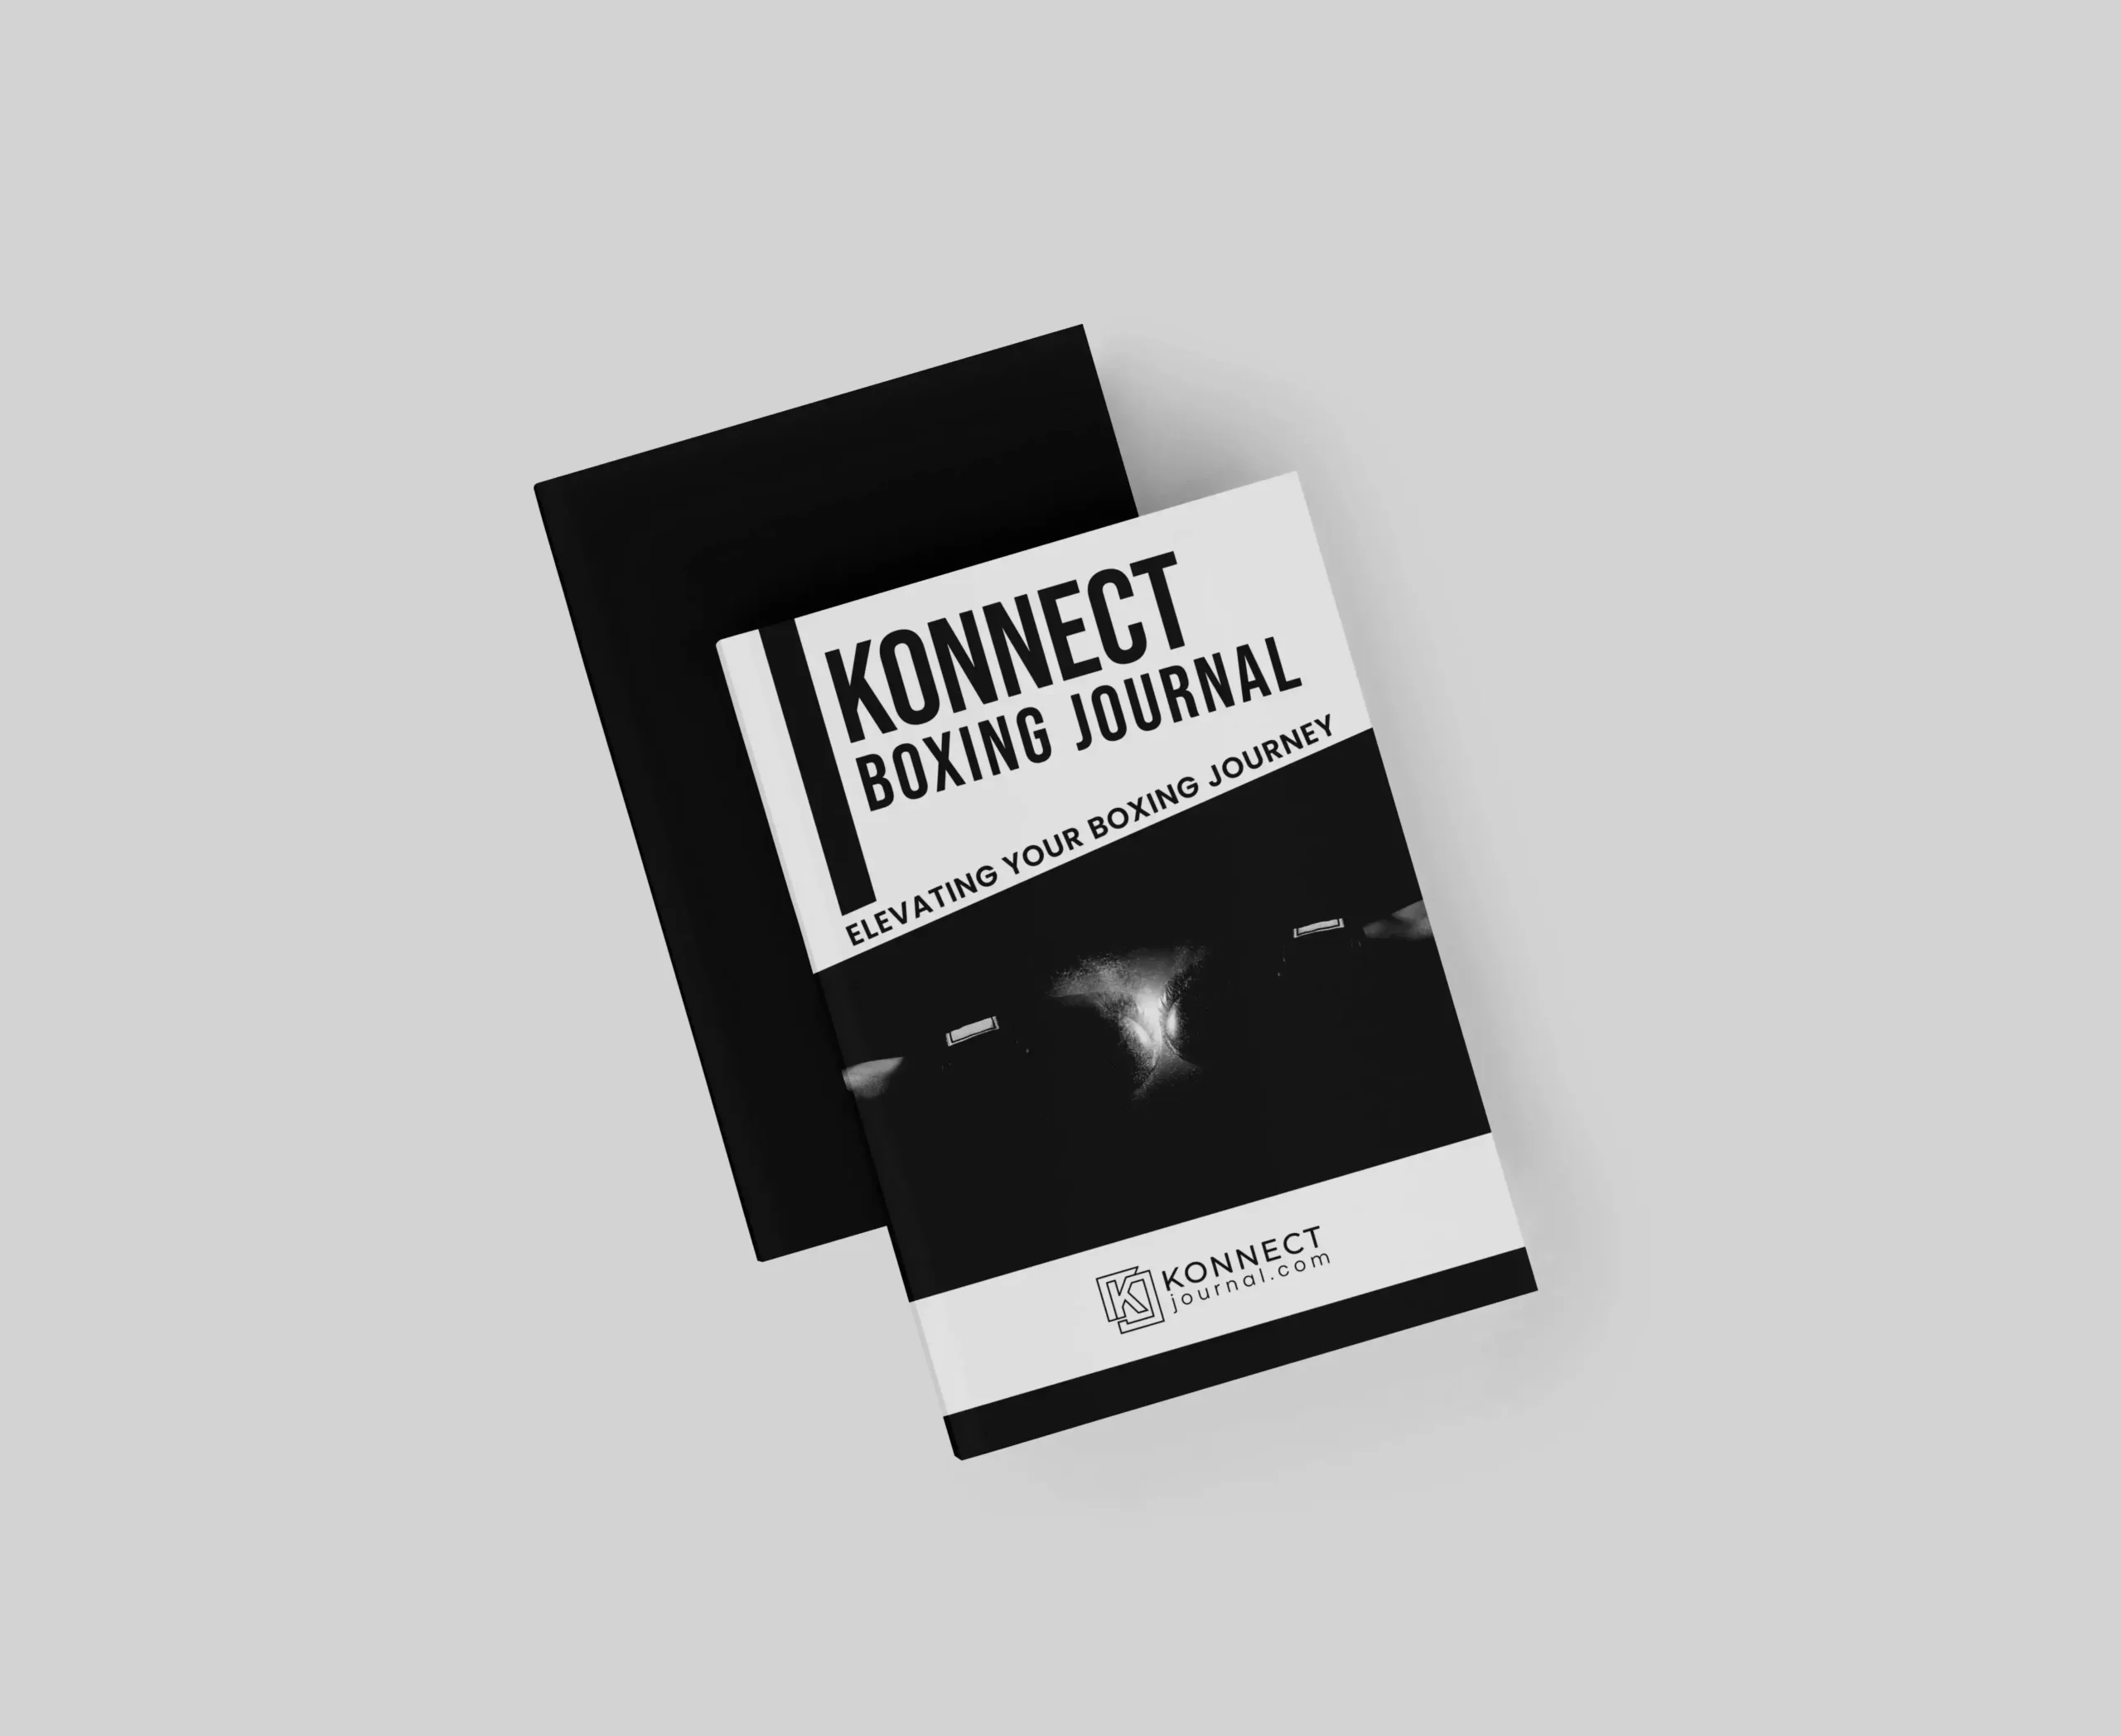 Konnect Boxing Journal